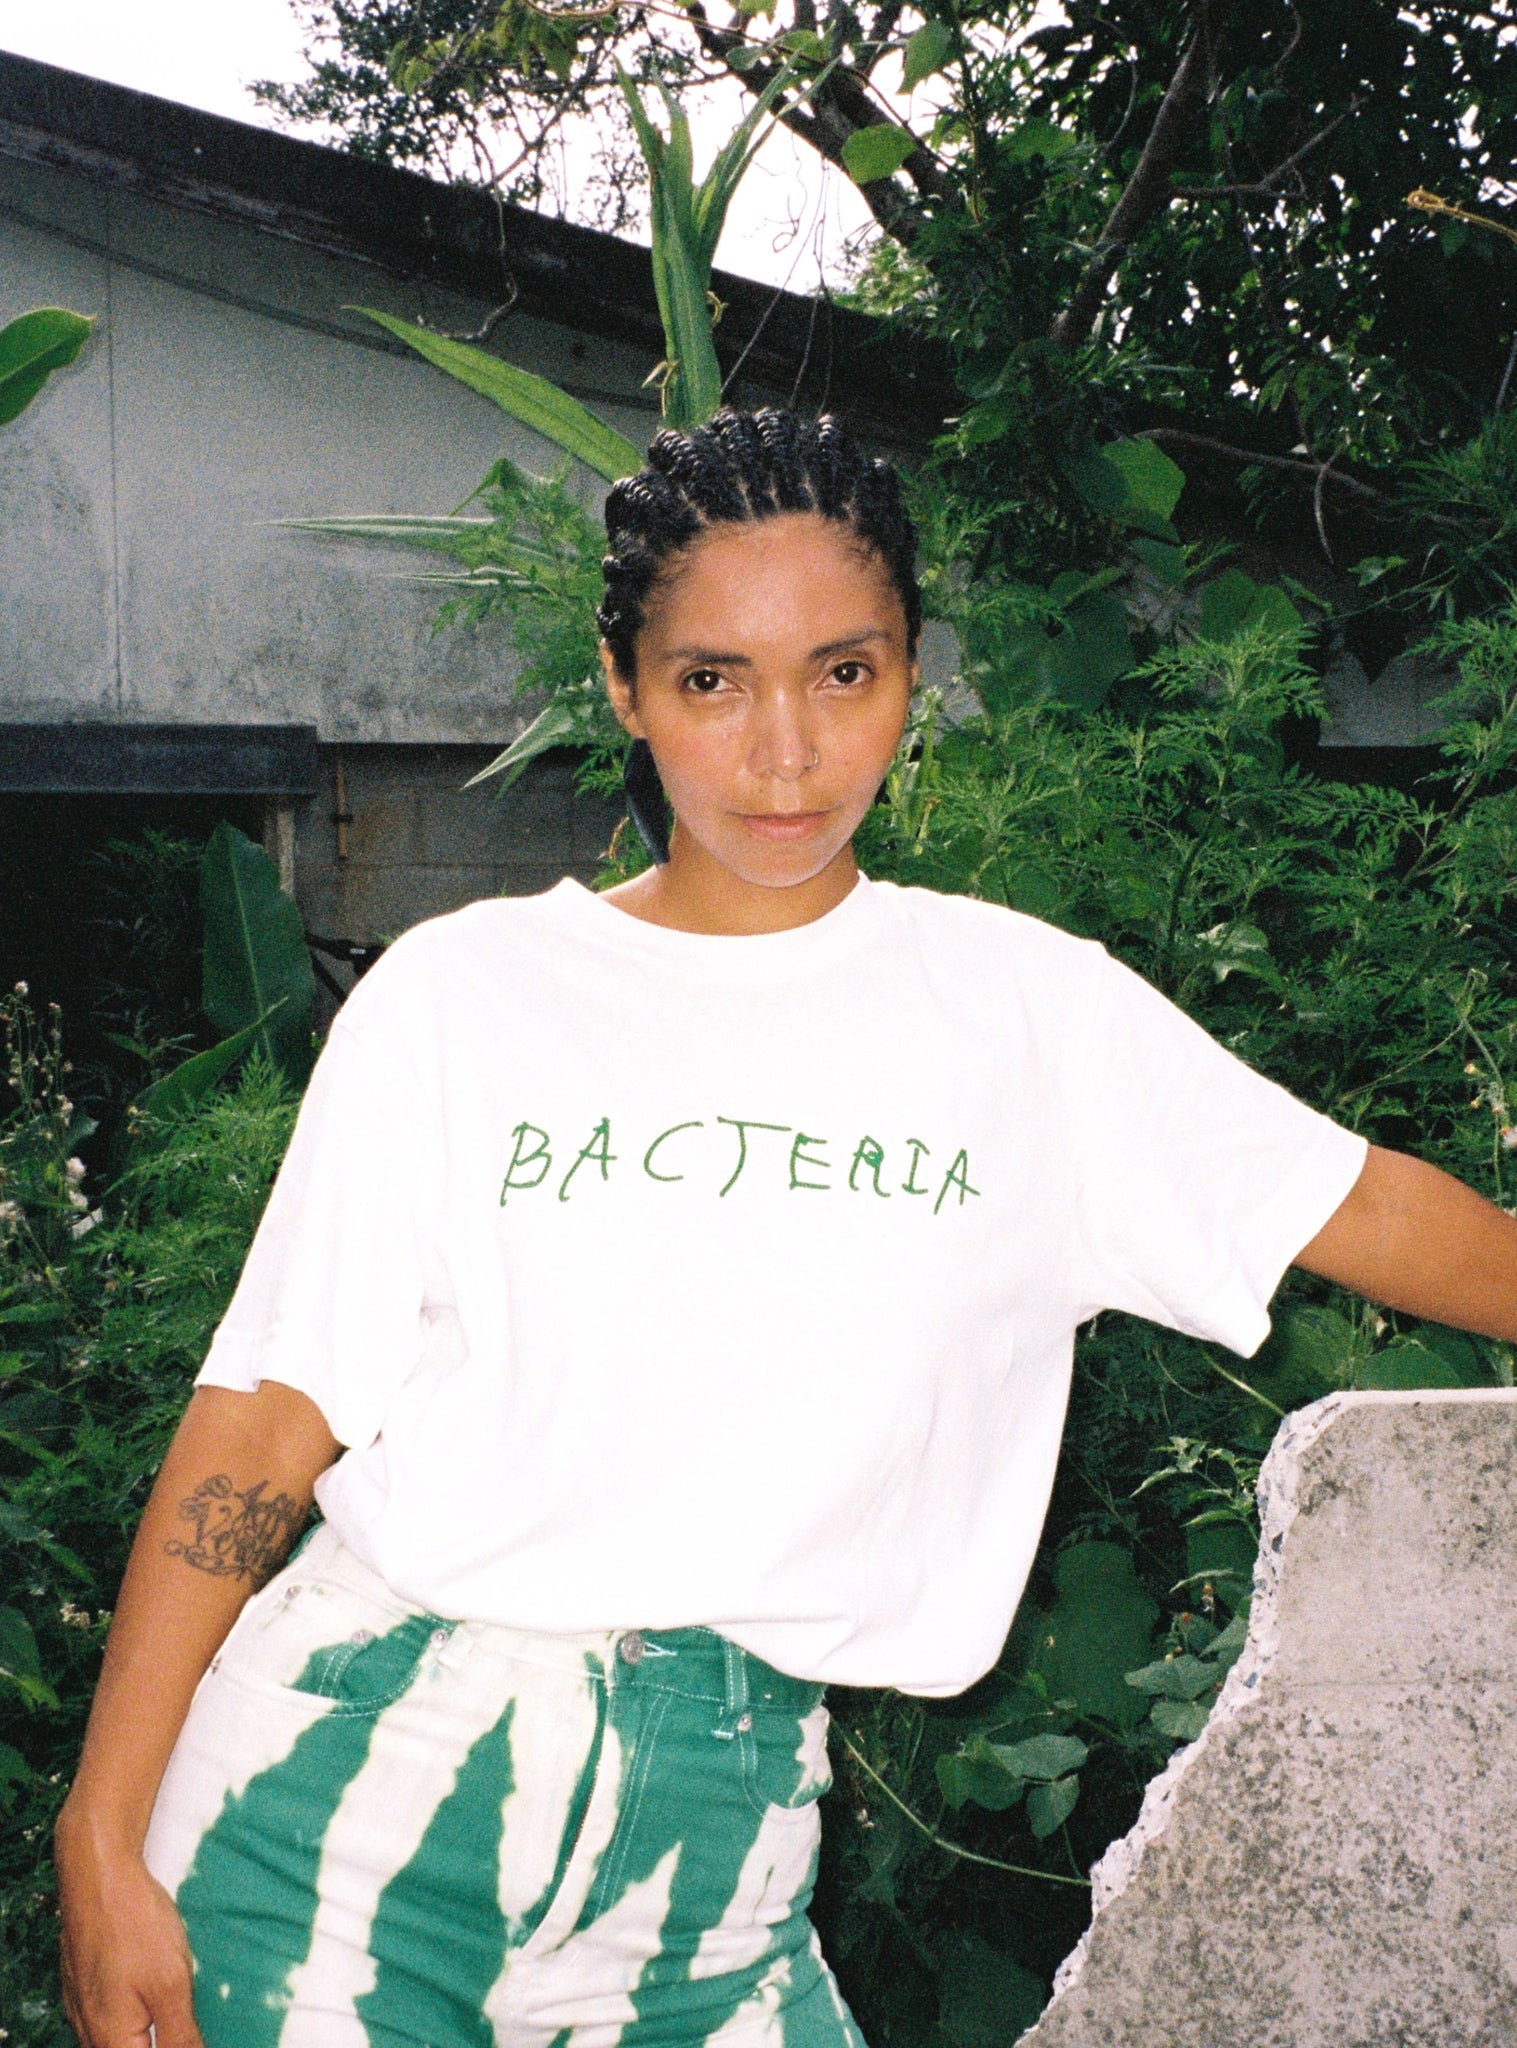 Bacteria T-shirt